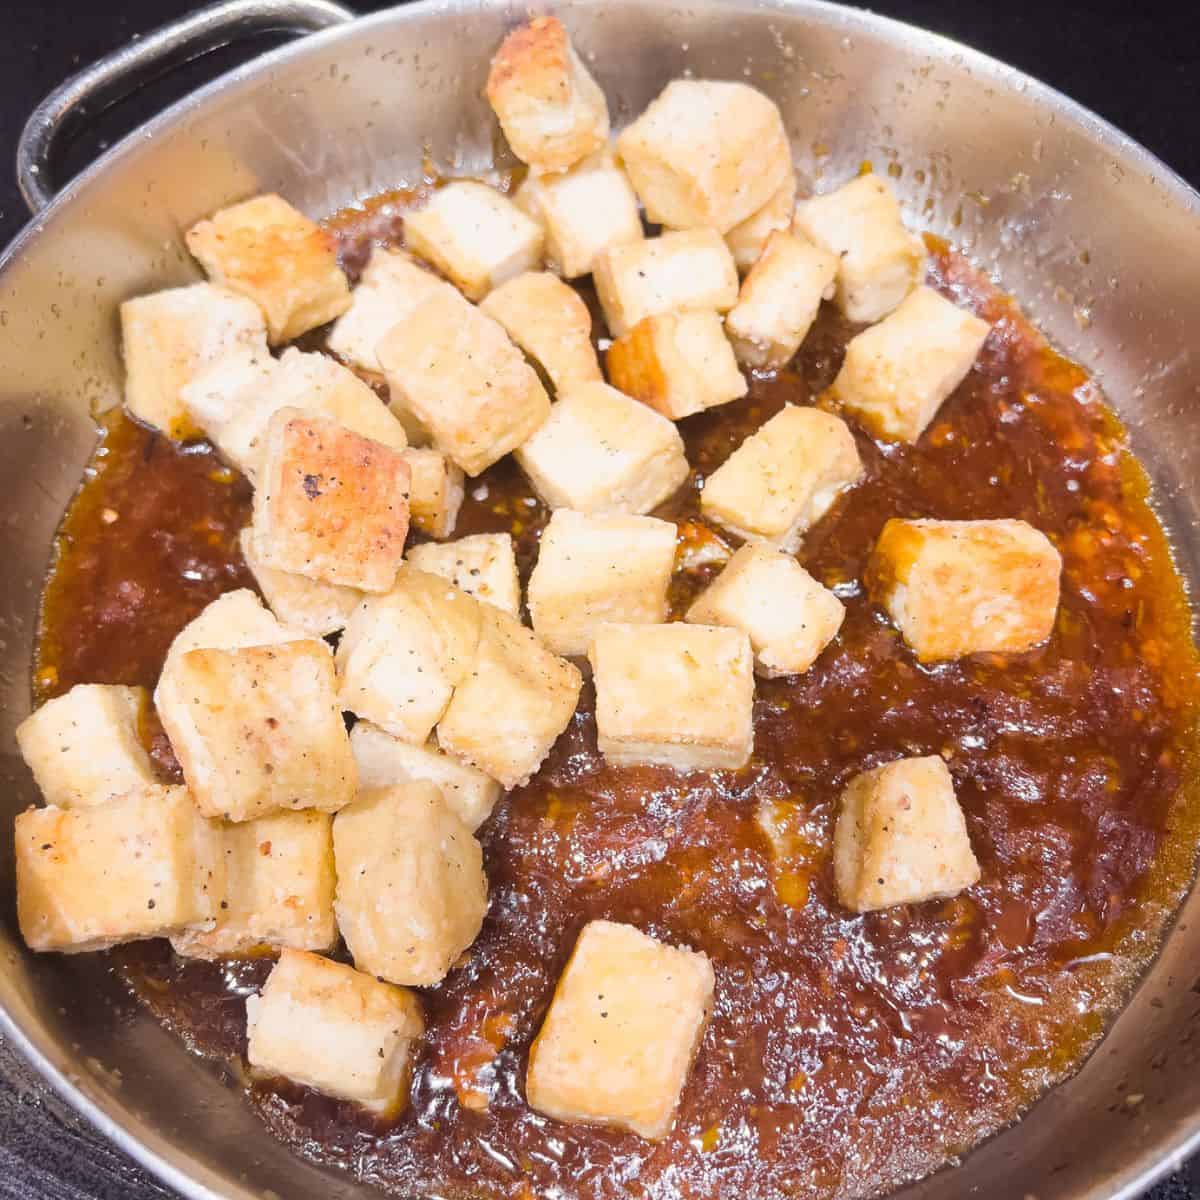 Combining orange tofu sauce with the fried tofu.